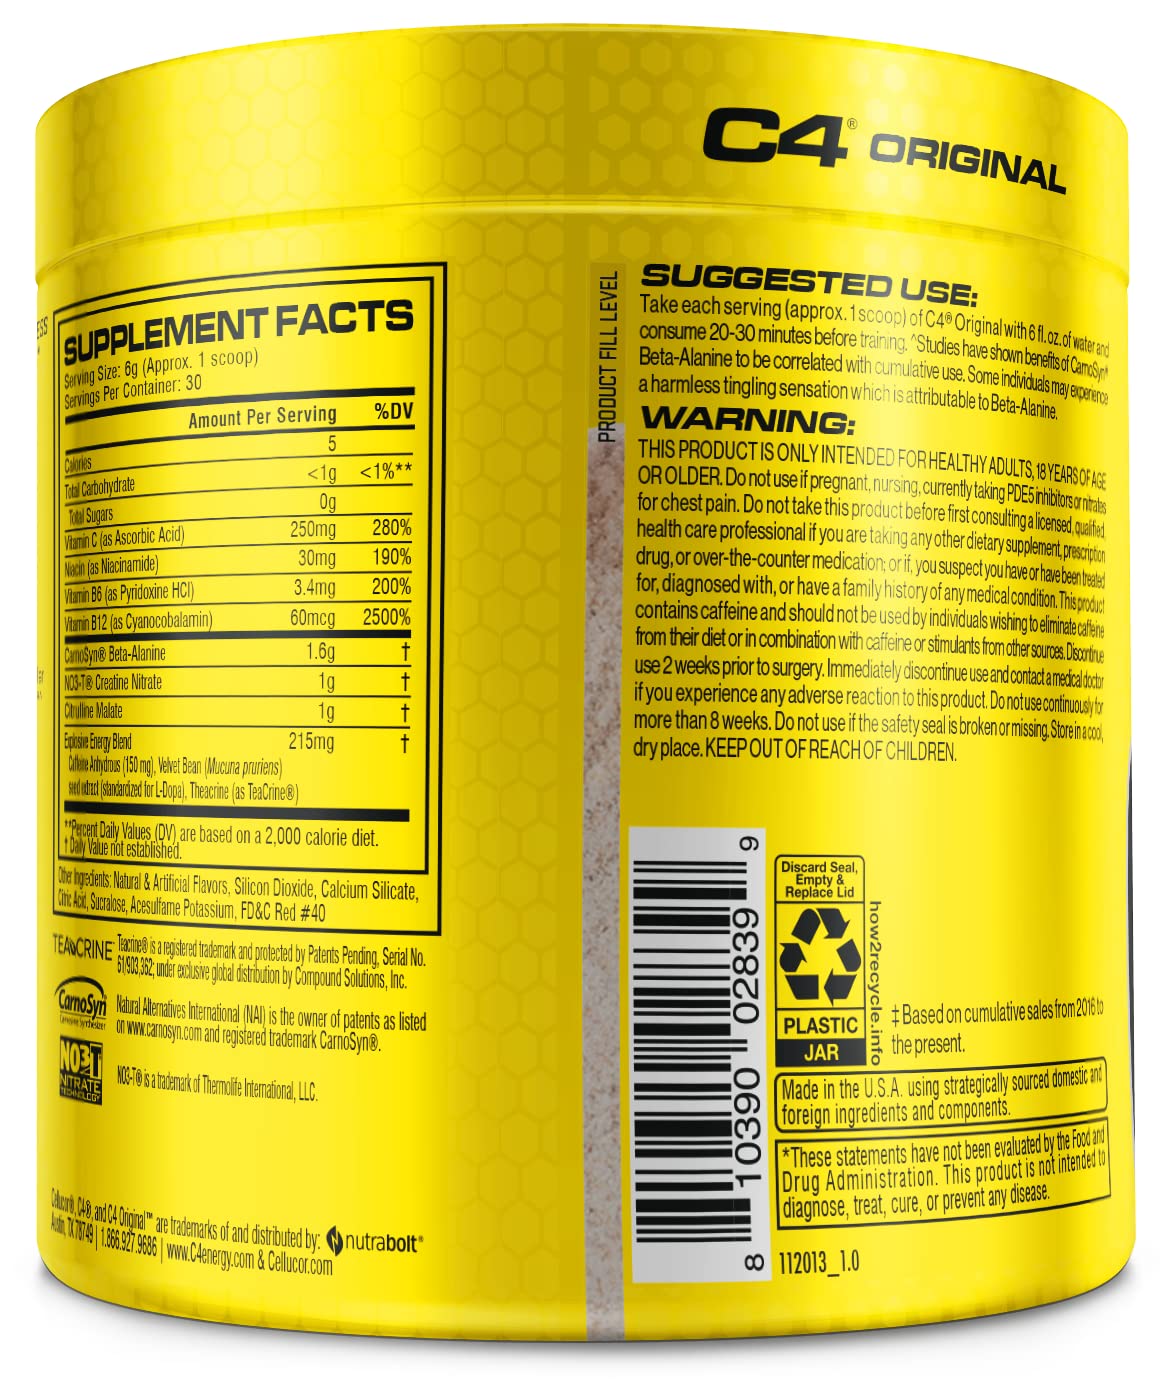 Cellucor C4 Original Pre Workout Powder Fruit Punch | Vitamin C for Immune Support | Sugar Free Preworkout Energy for Men & Women | 150mg Caffeine + Beta Alanine + Creatine | 30 Servings